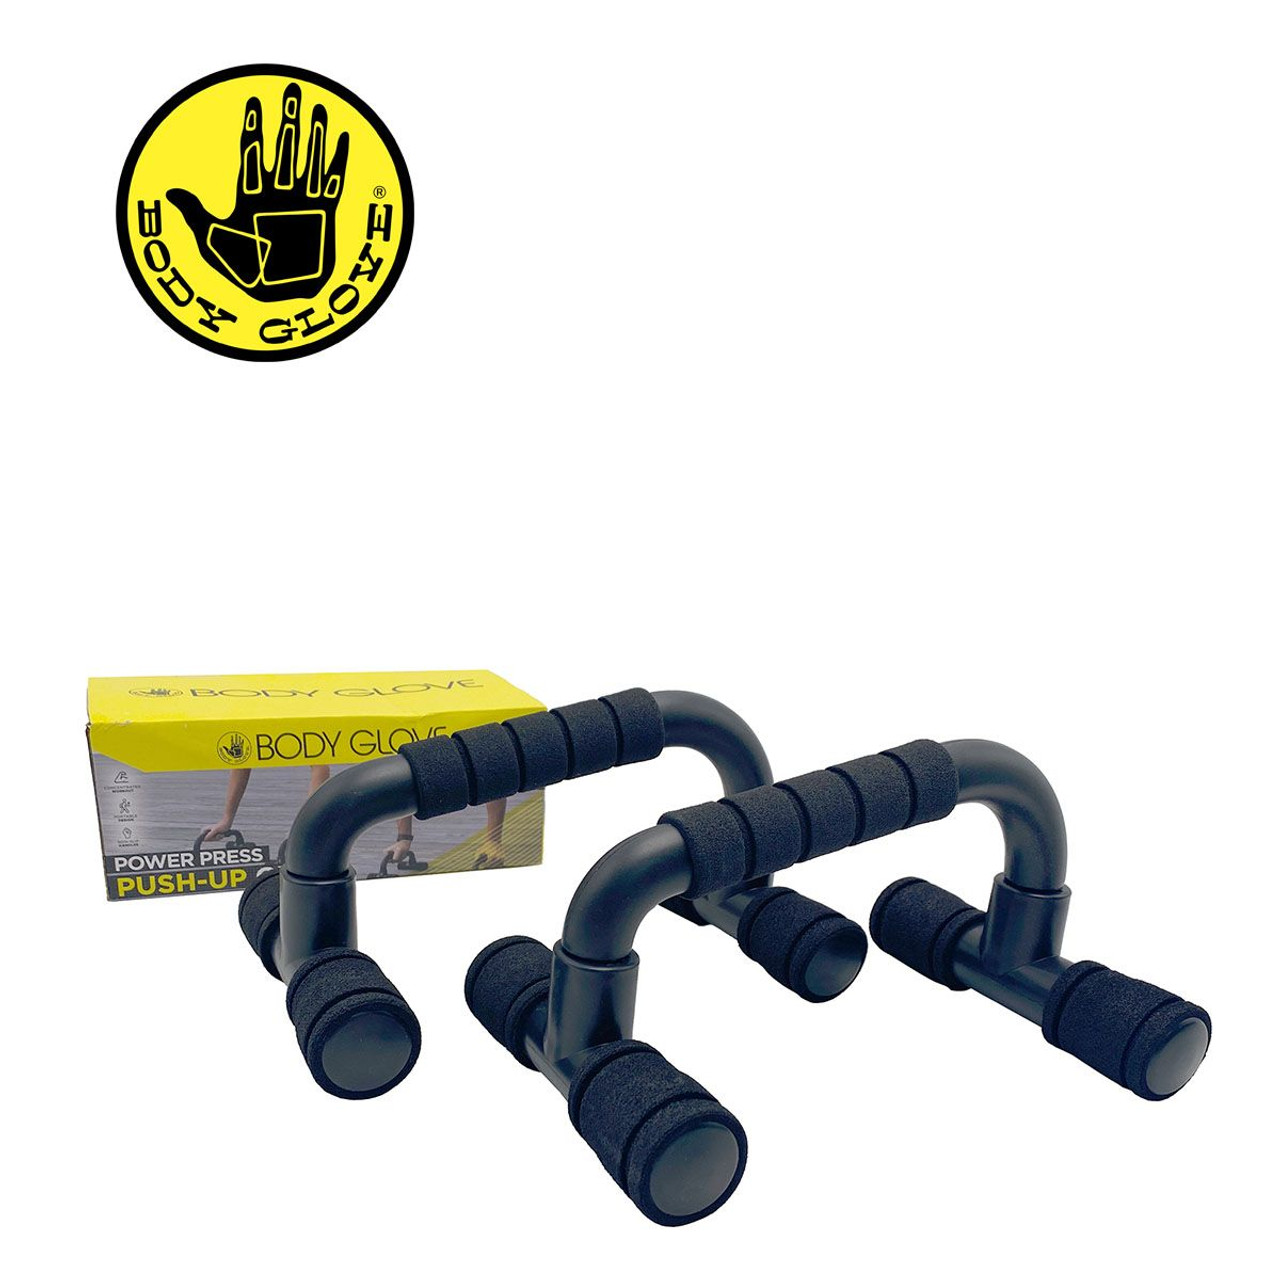 Body Glove® Power Press Push-up Bars product image